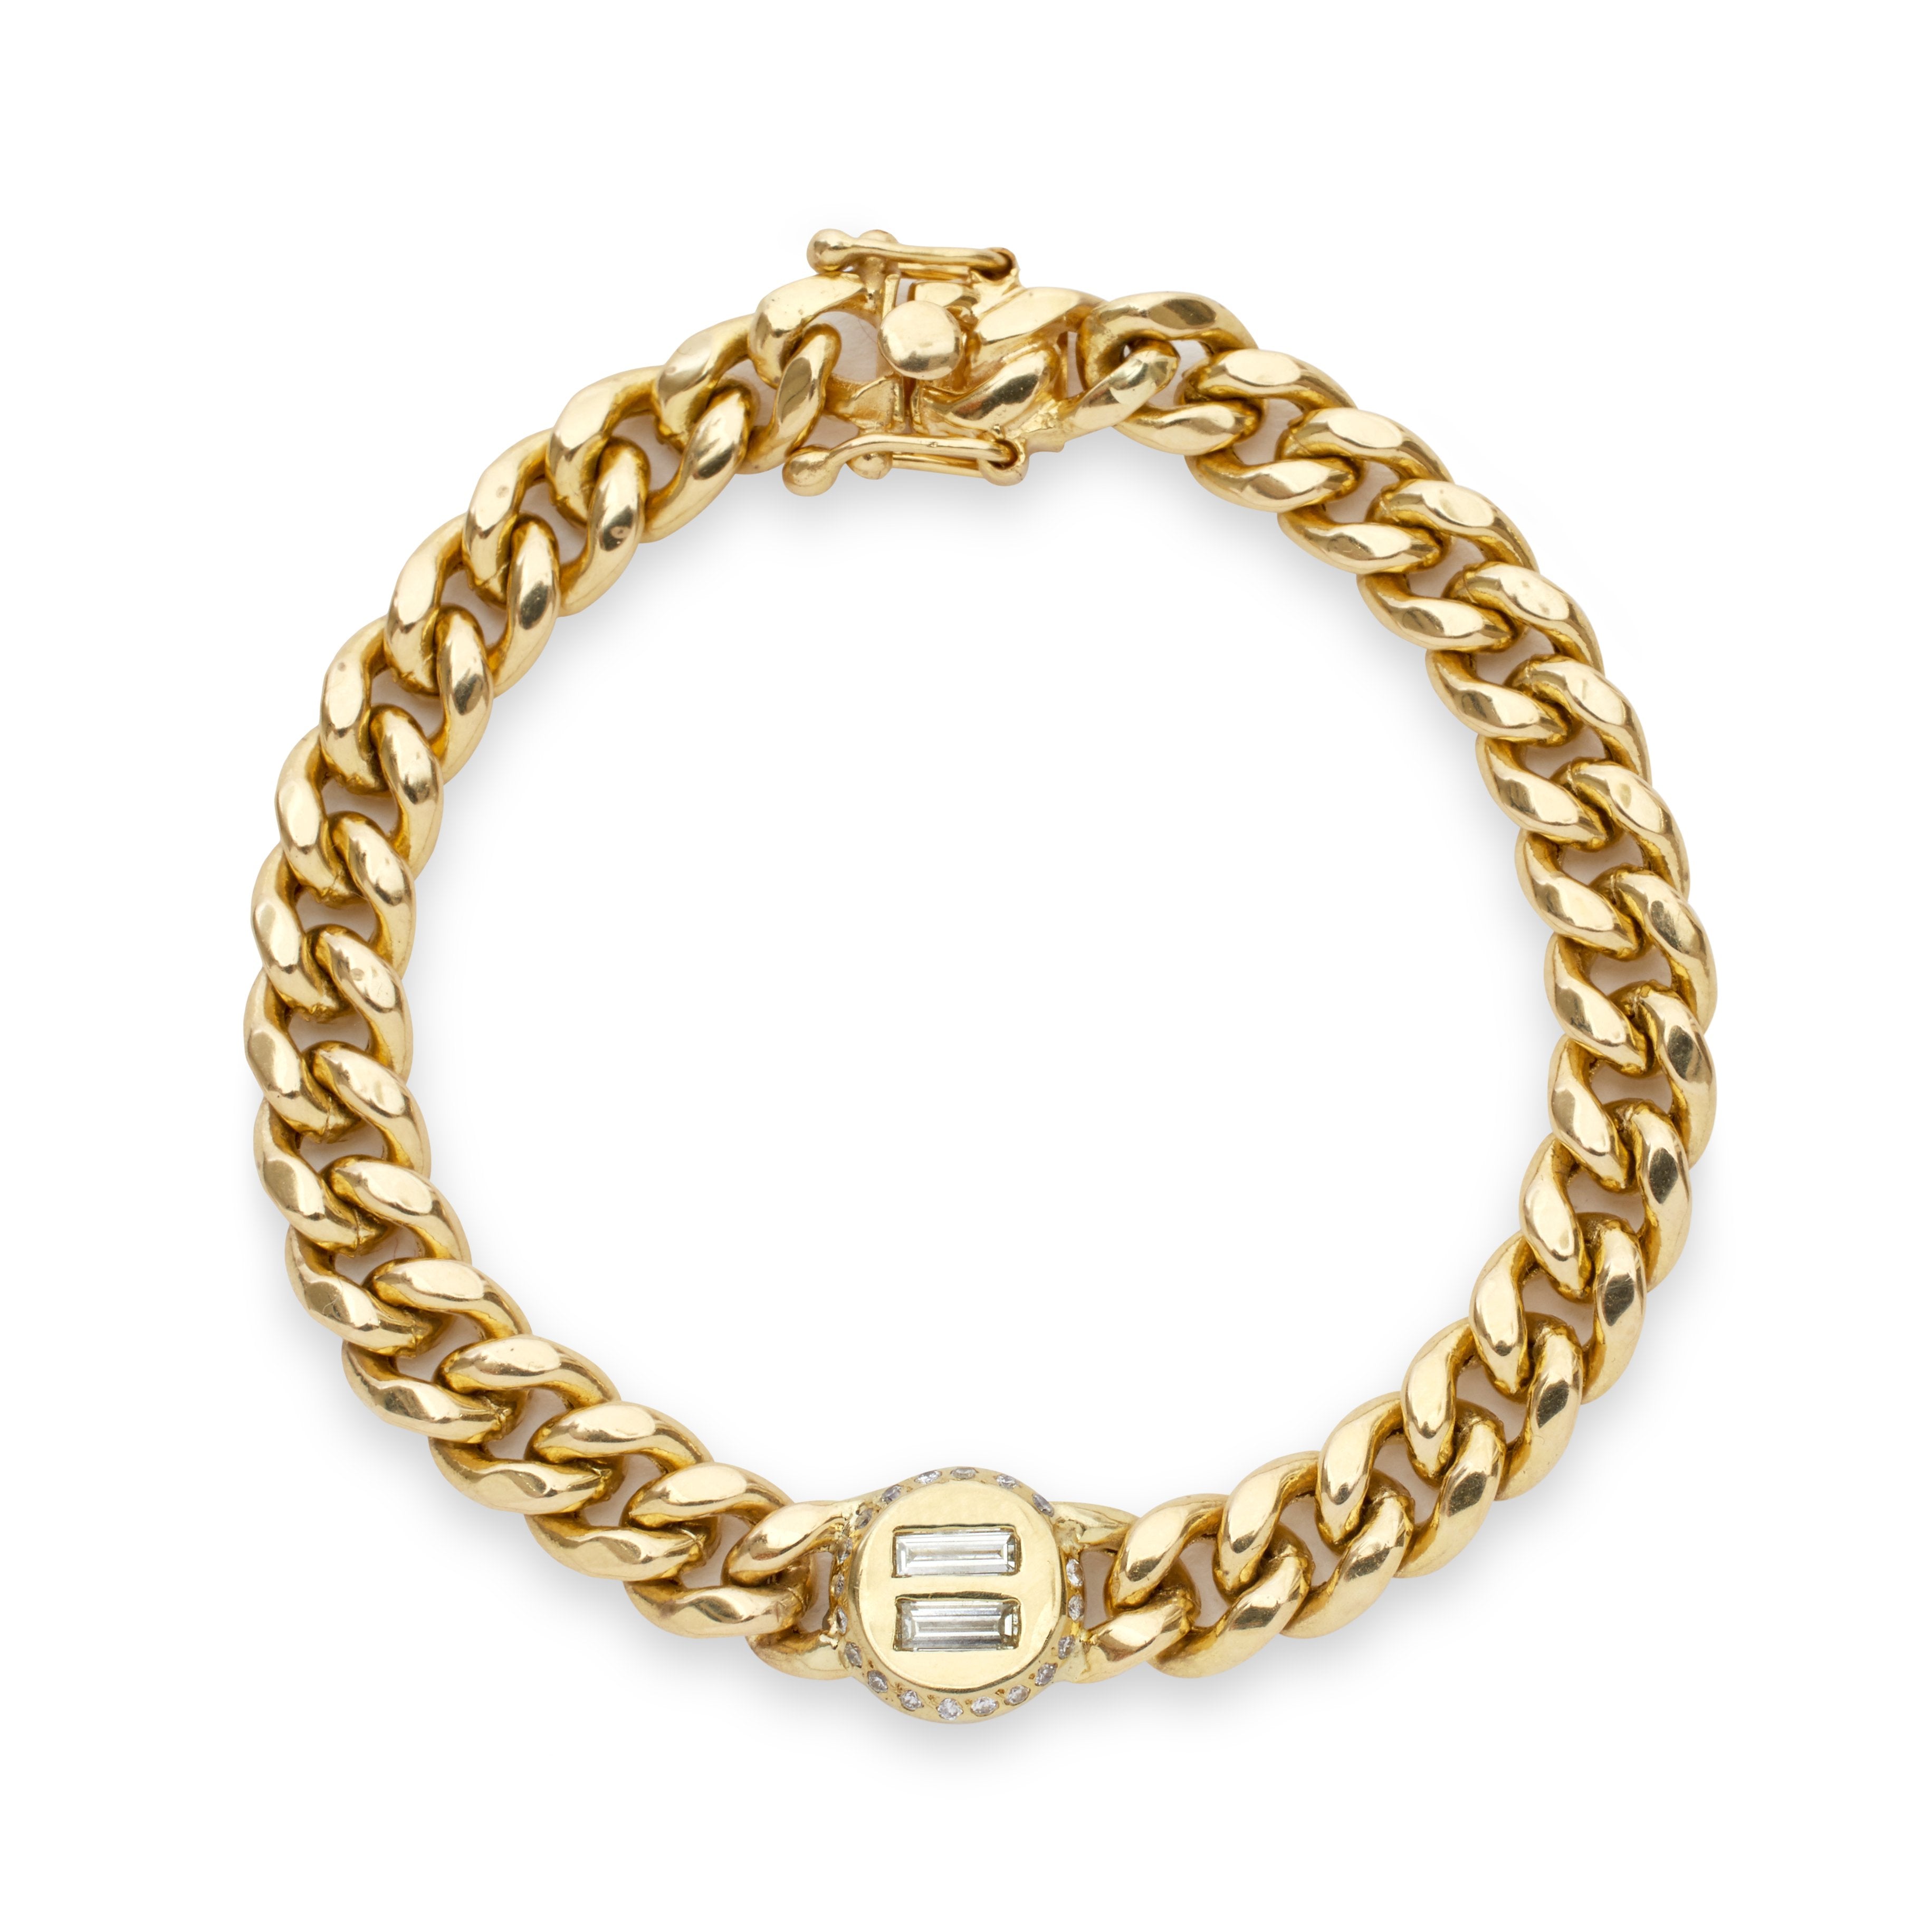 Equality Chain Bracelet